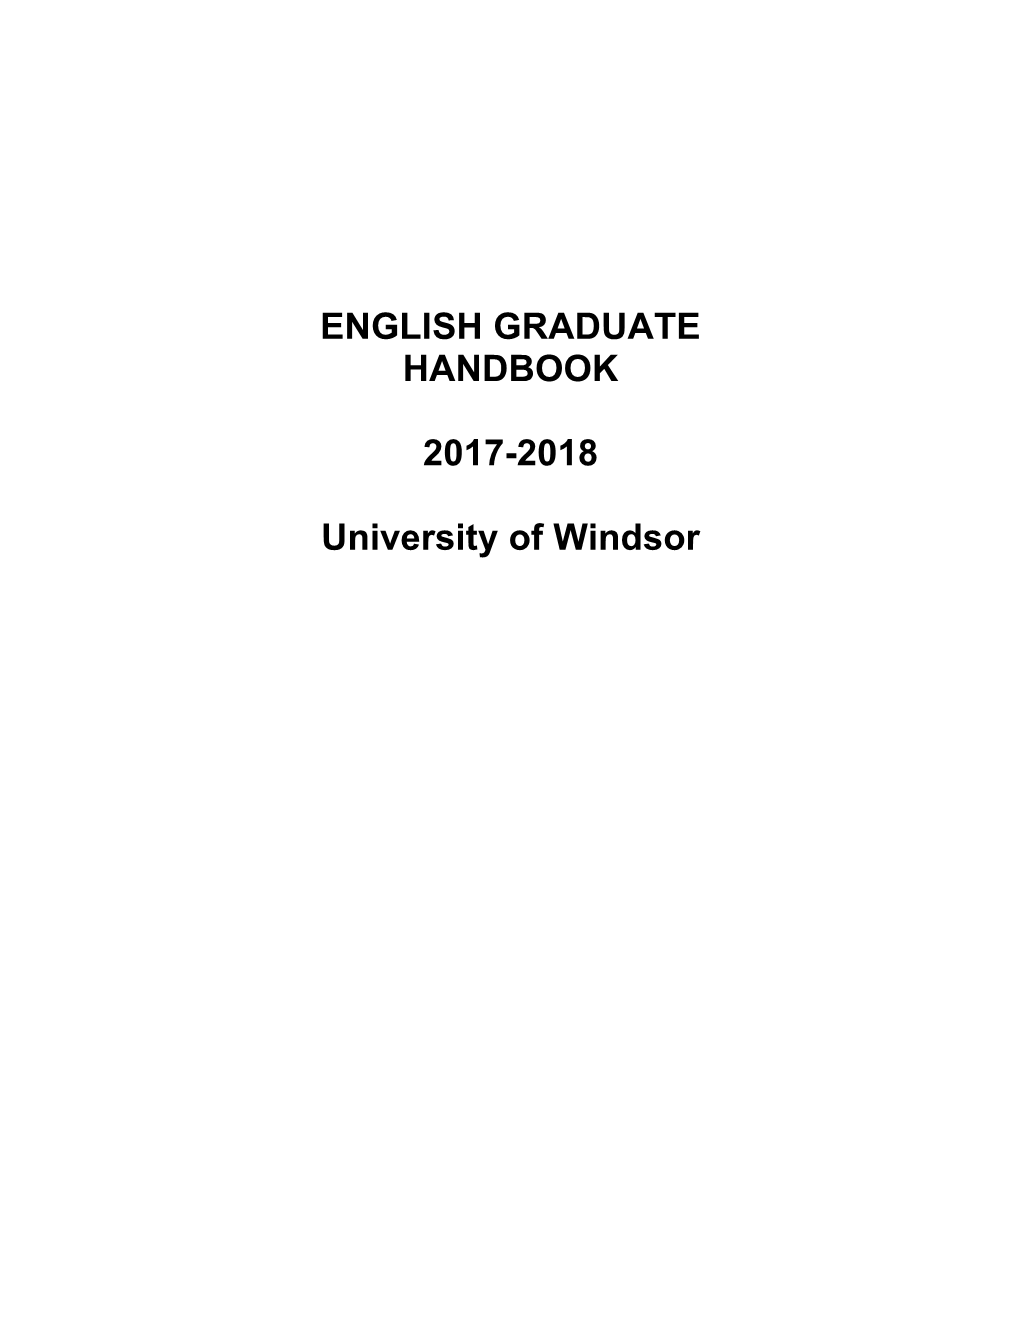 ENGLISH GRADUATE HANDBOOK 2017-2018 University of Windsor